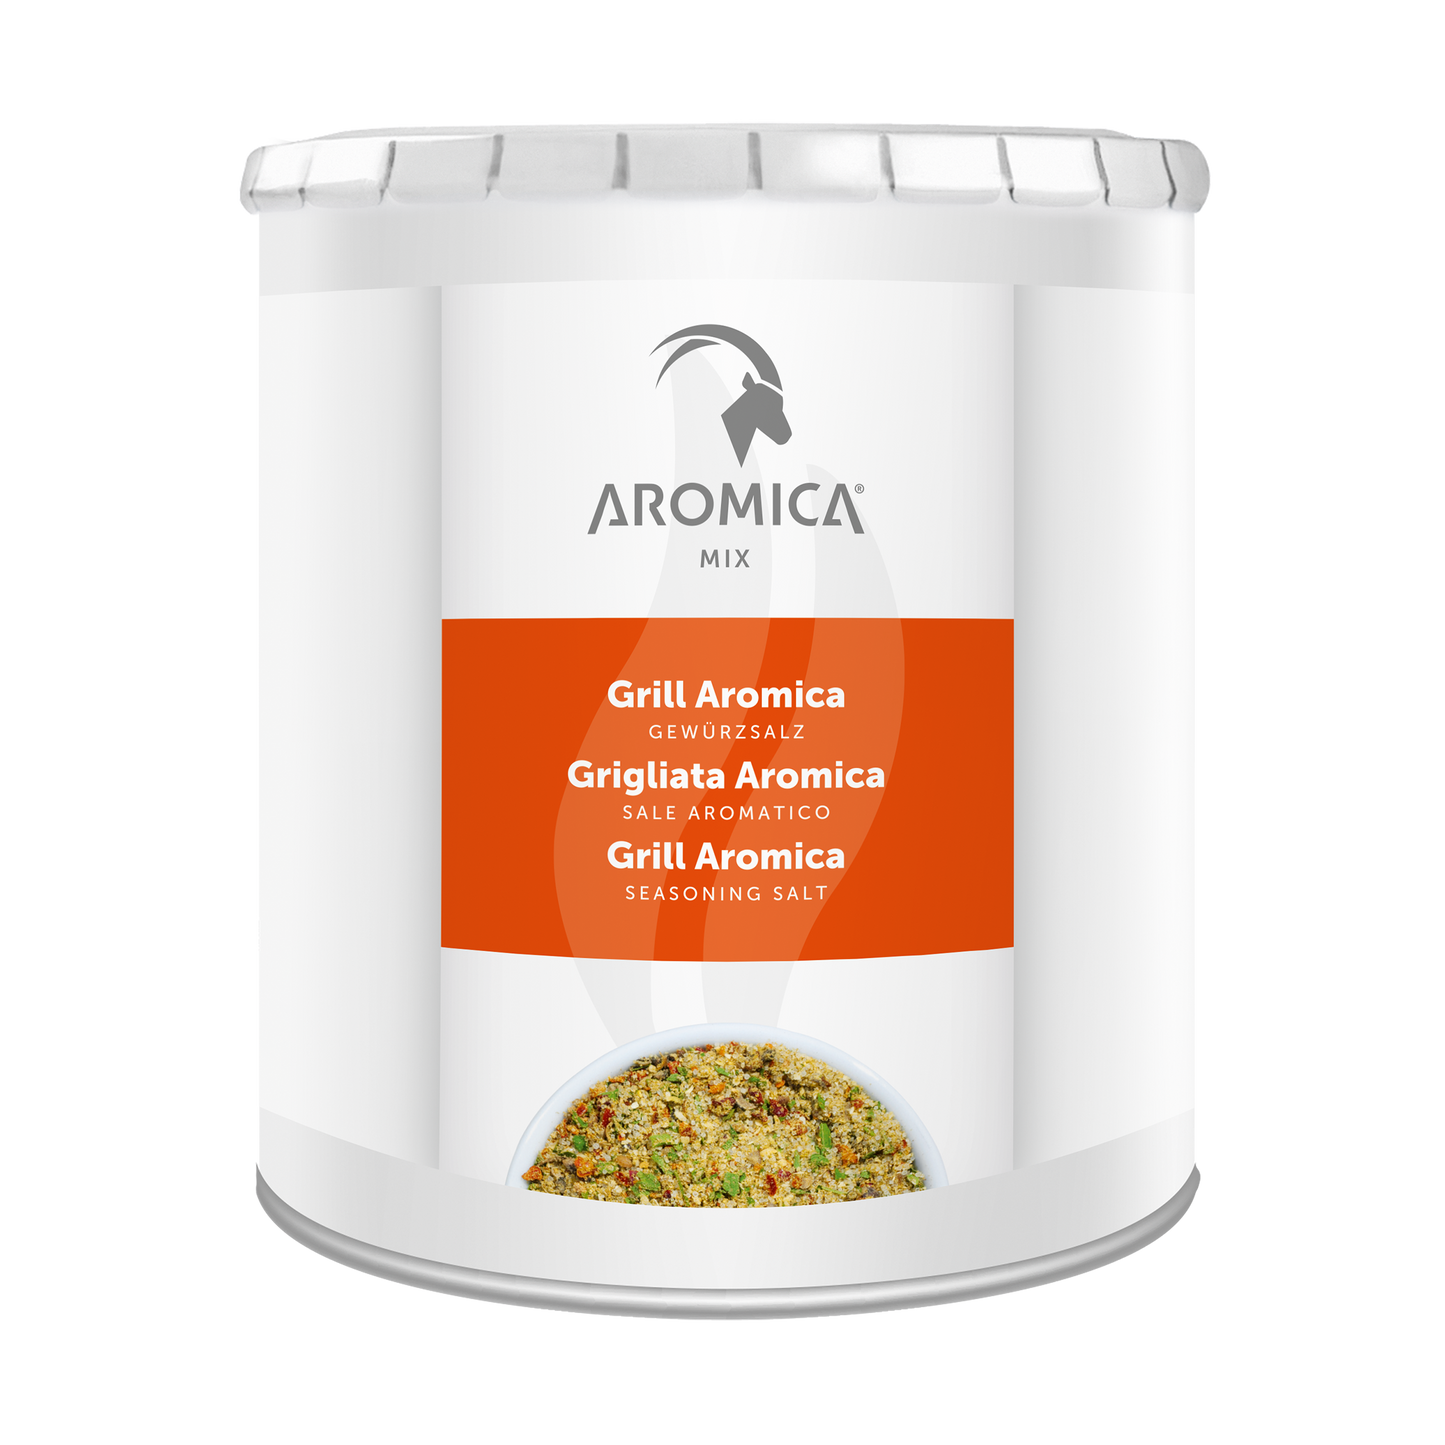 Grill Aromaca seasoning salt